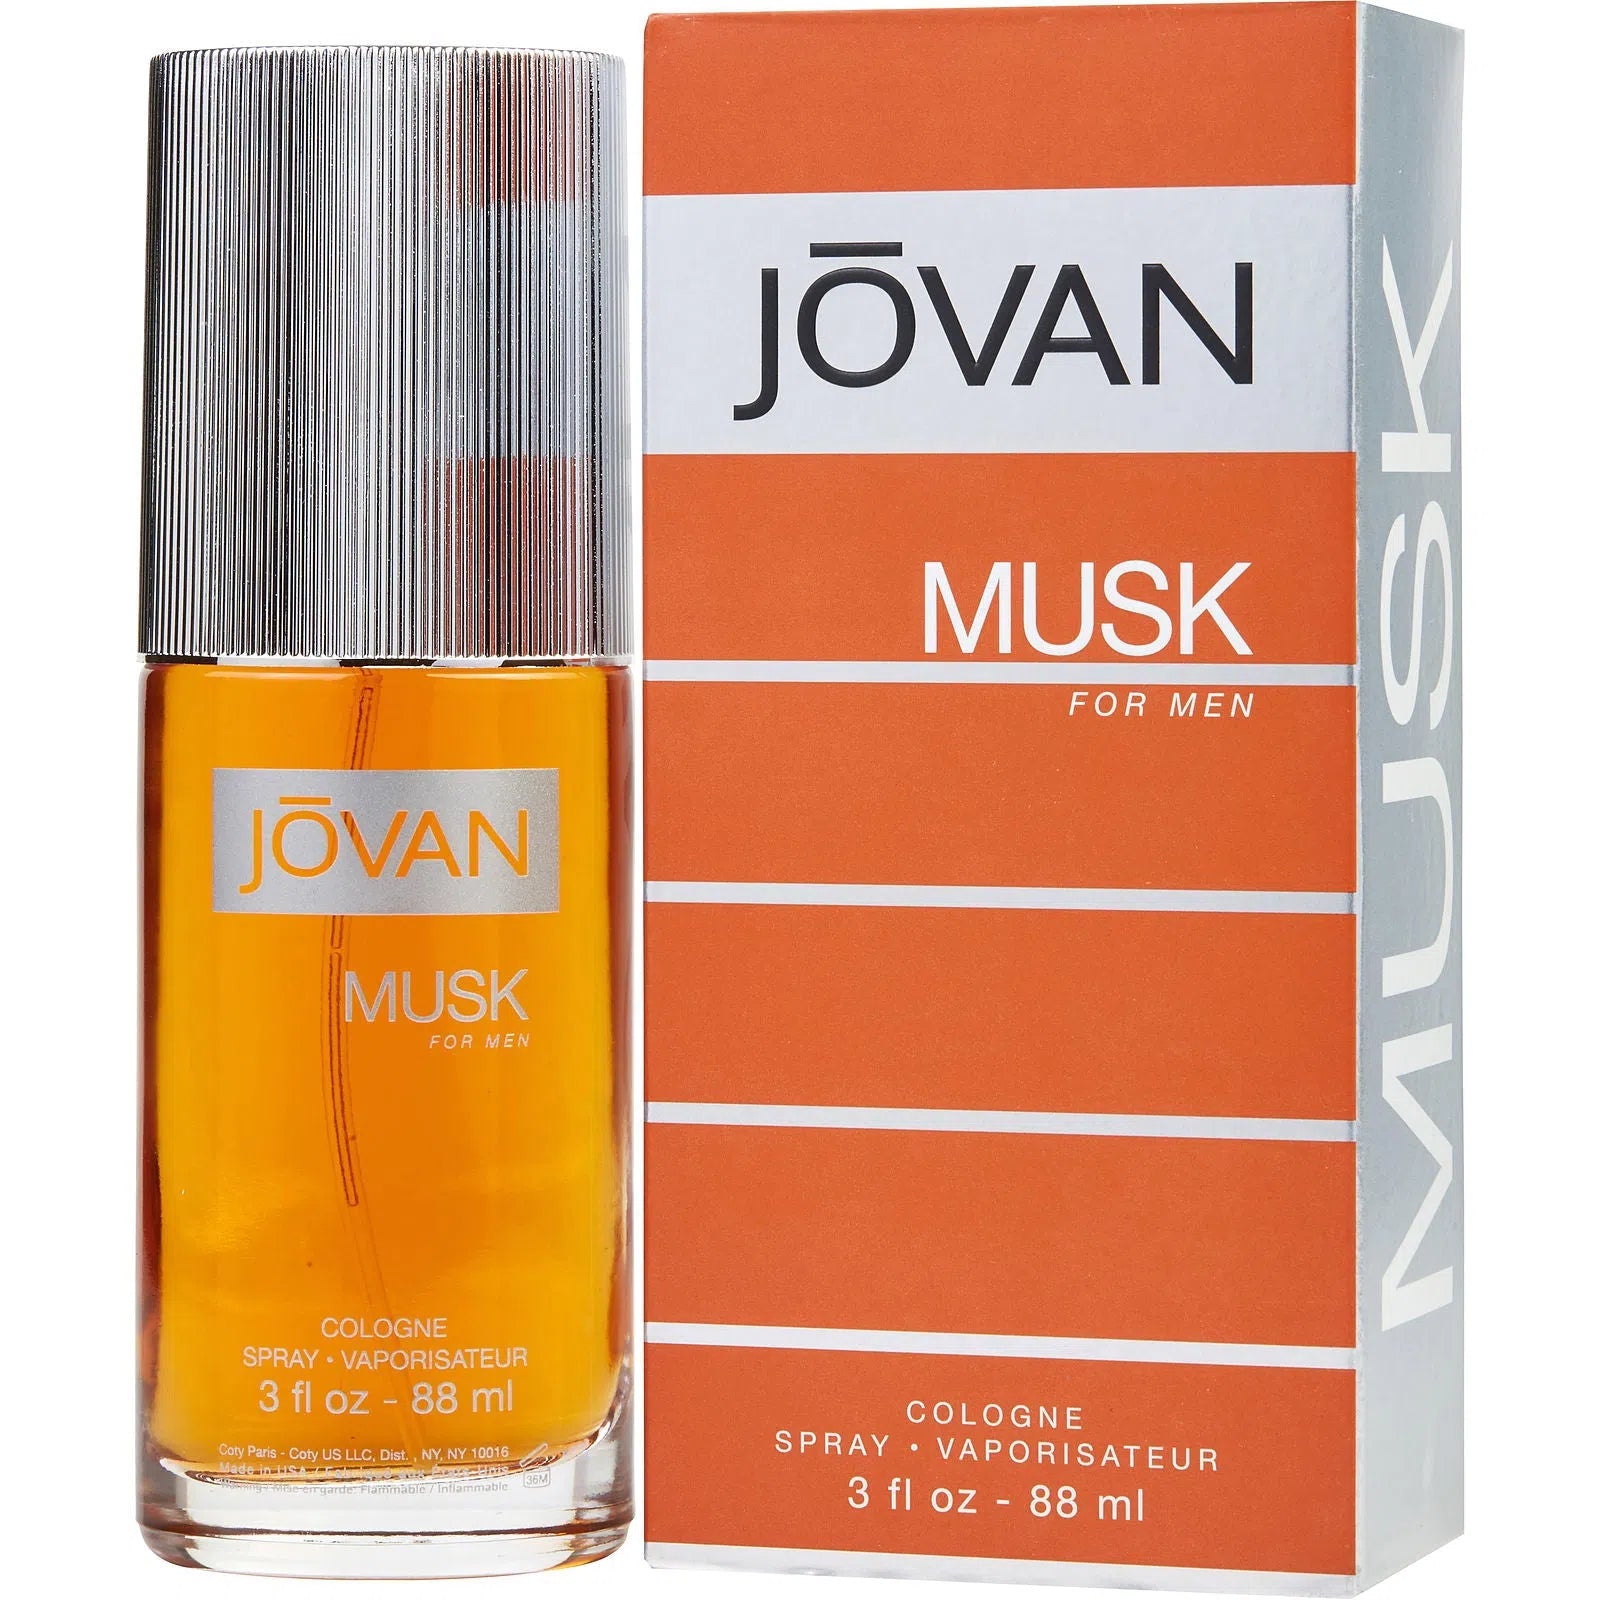 Perfume Jovan Musk For Men EDC (M) / 88 ml - 035017008923- 1 - Prive Perfumes Honduras